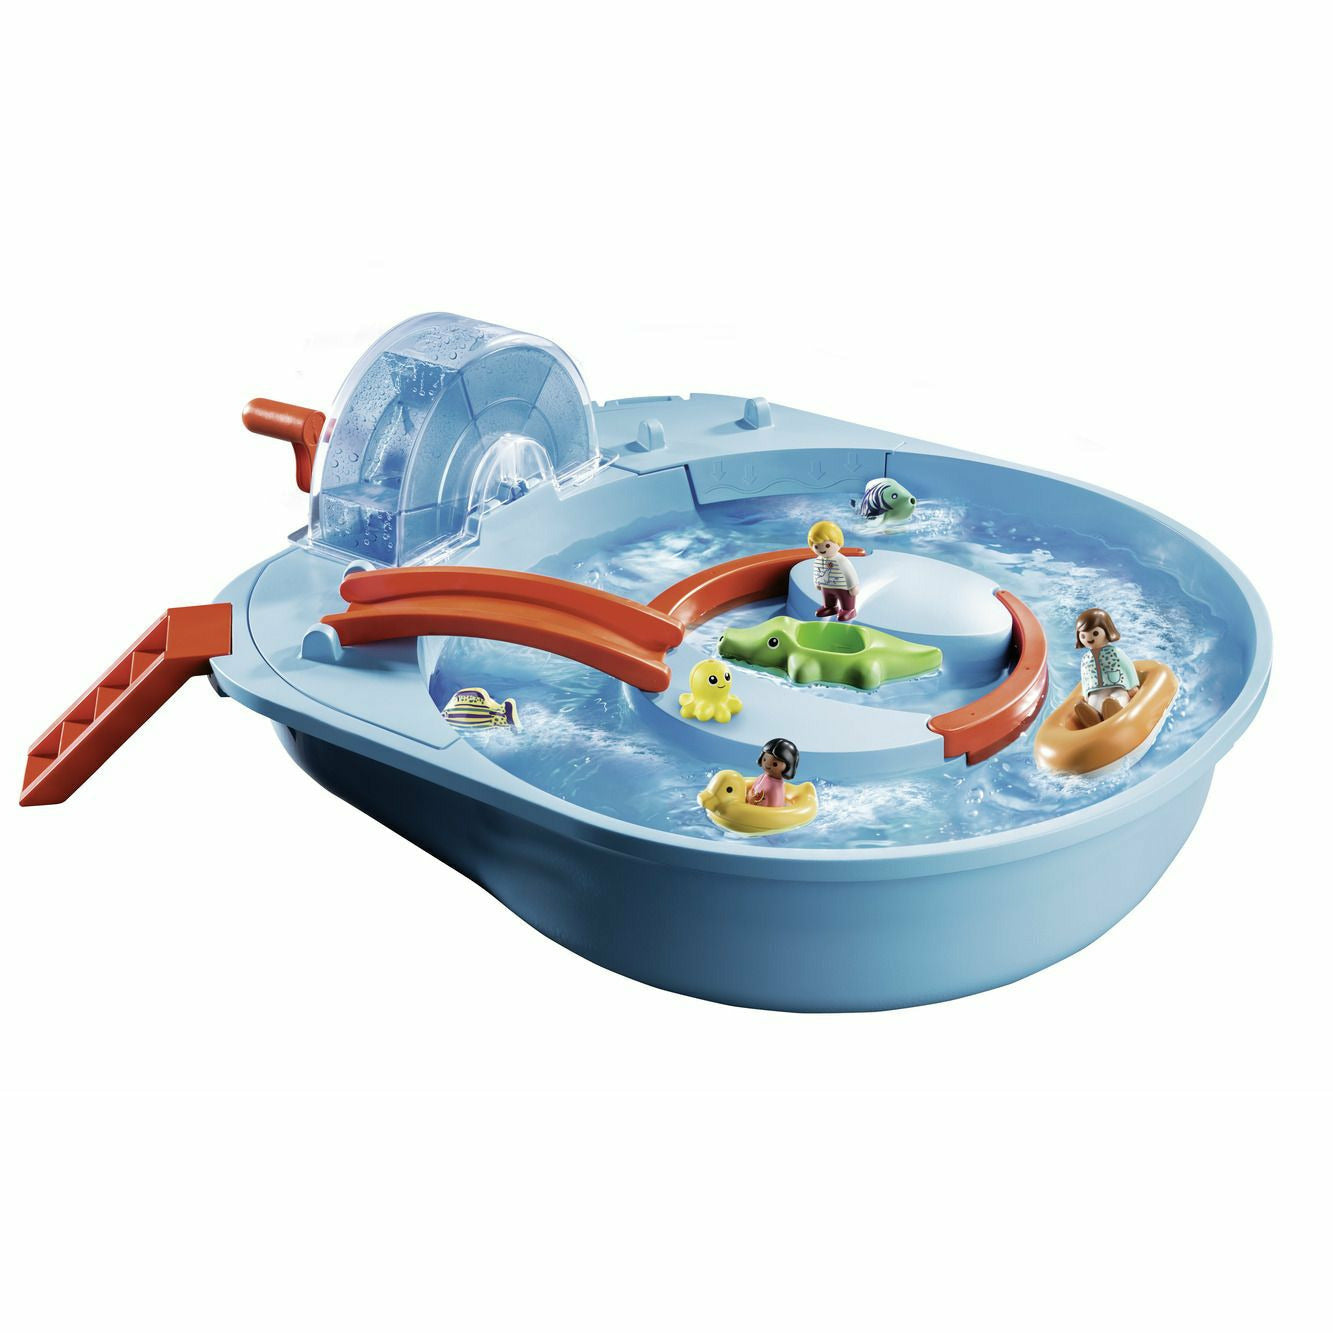 Playmobil 1.2.3 70268 AQUA Water Wheel Carousel For 18+ Months